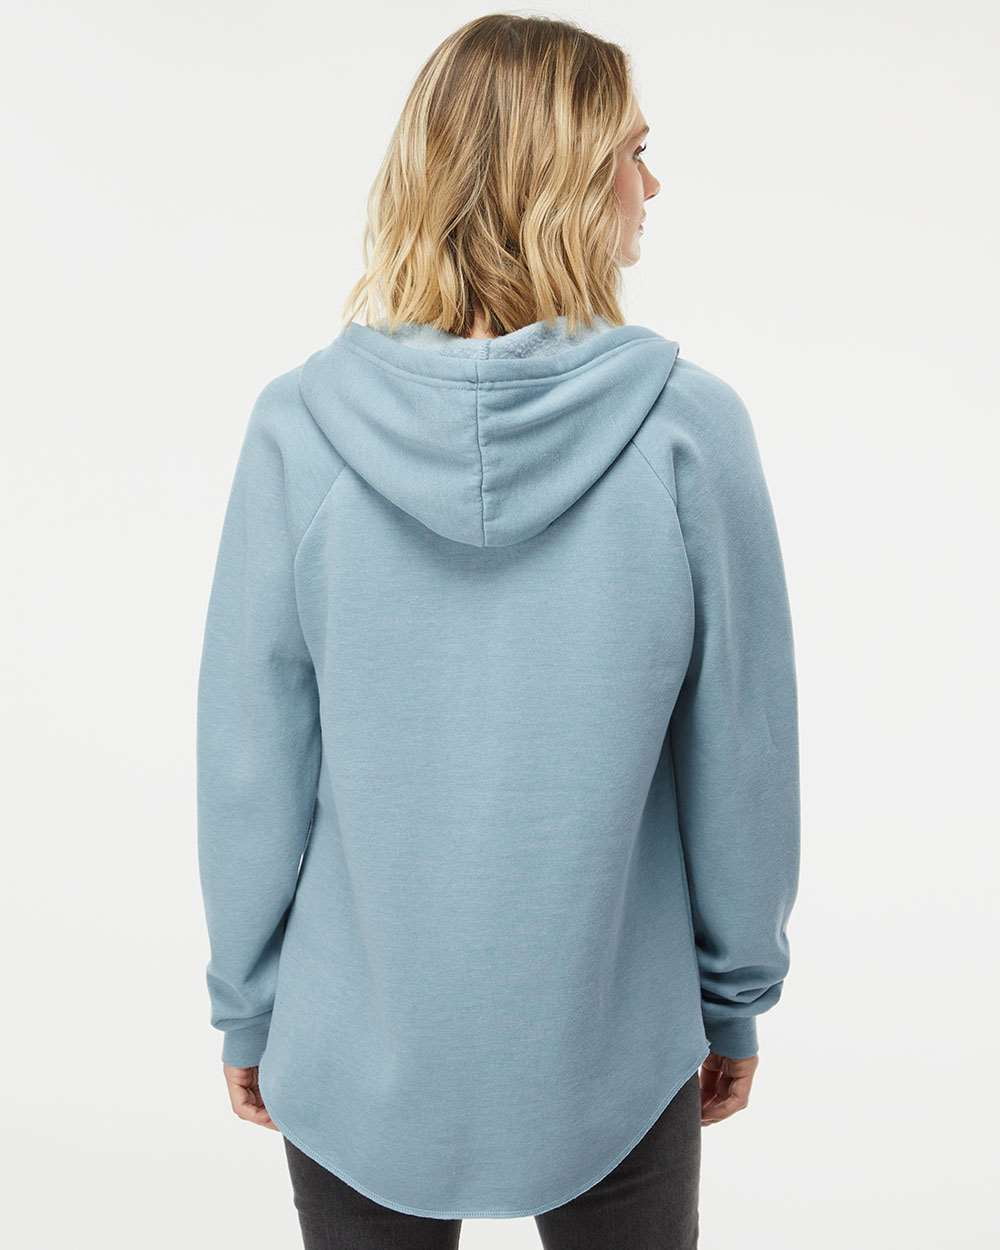 Women's Sweatshirts &Hoodies Online: Low Price Offer on